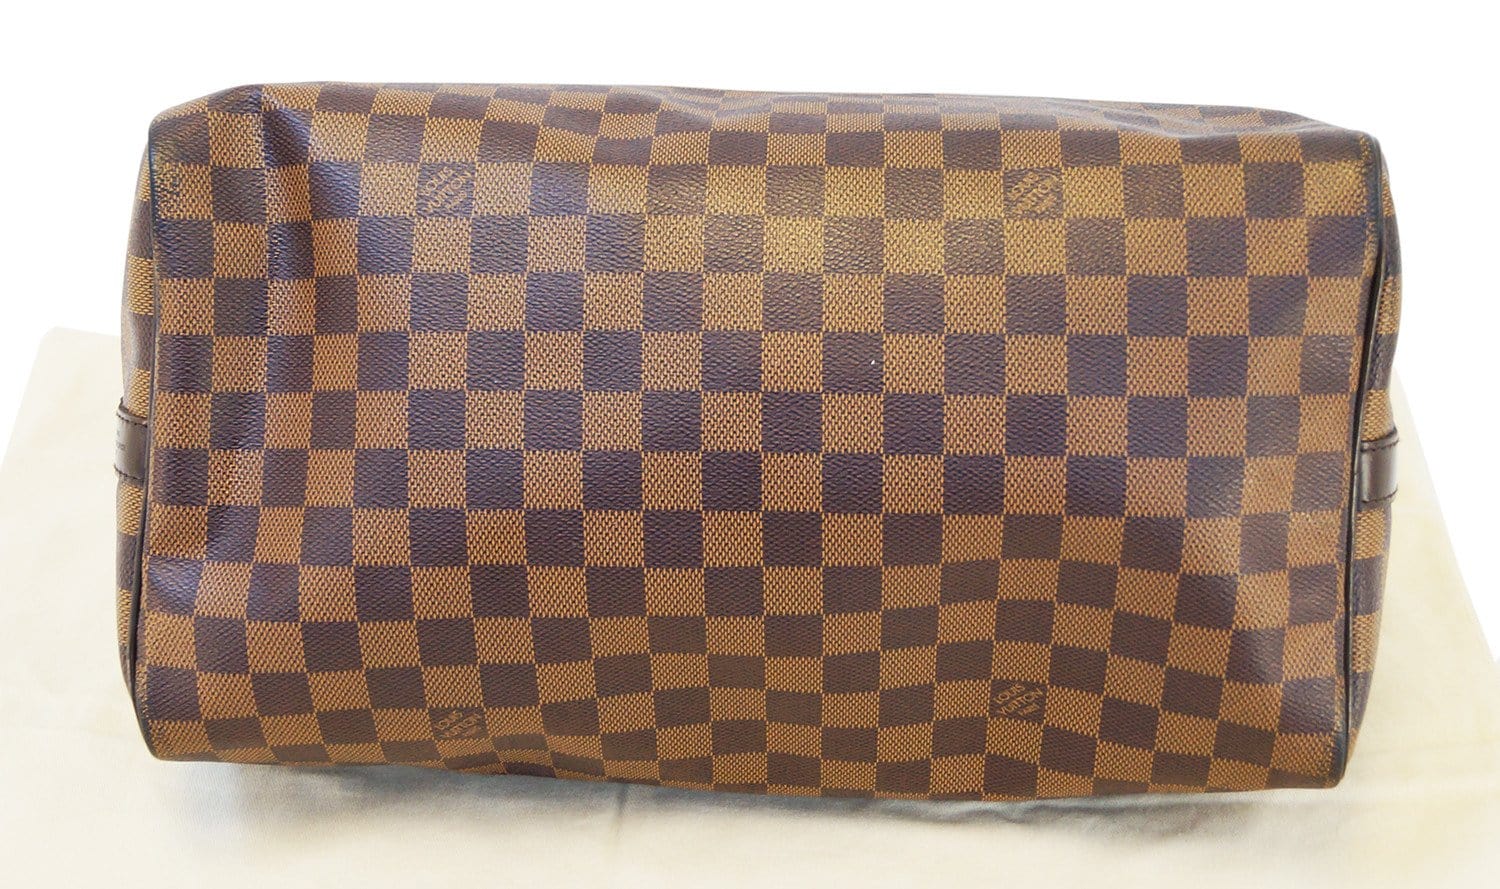 Authentic Louis Vuitton Damier Ebene Speedy 35 Handbag – Paris